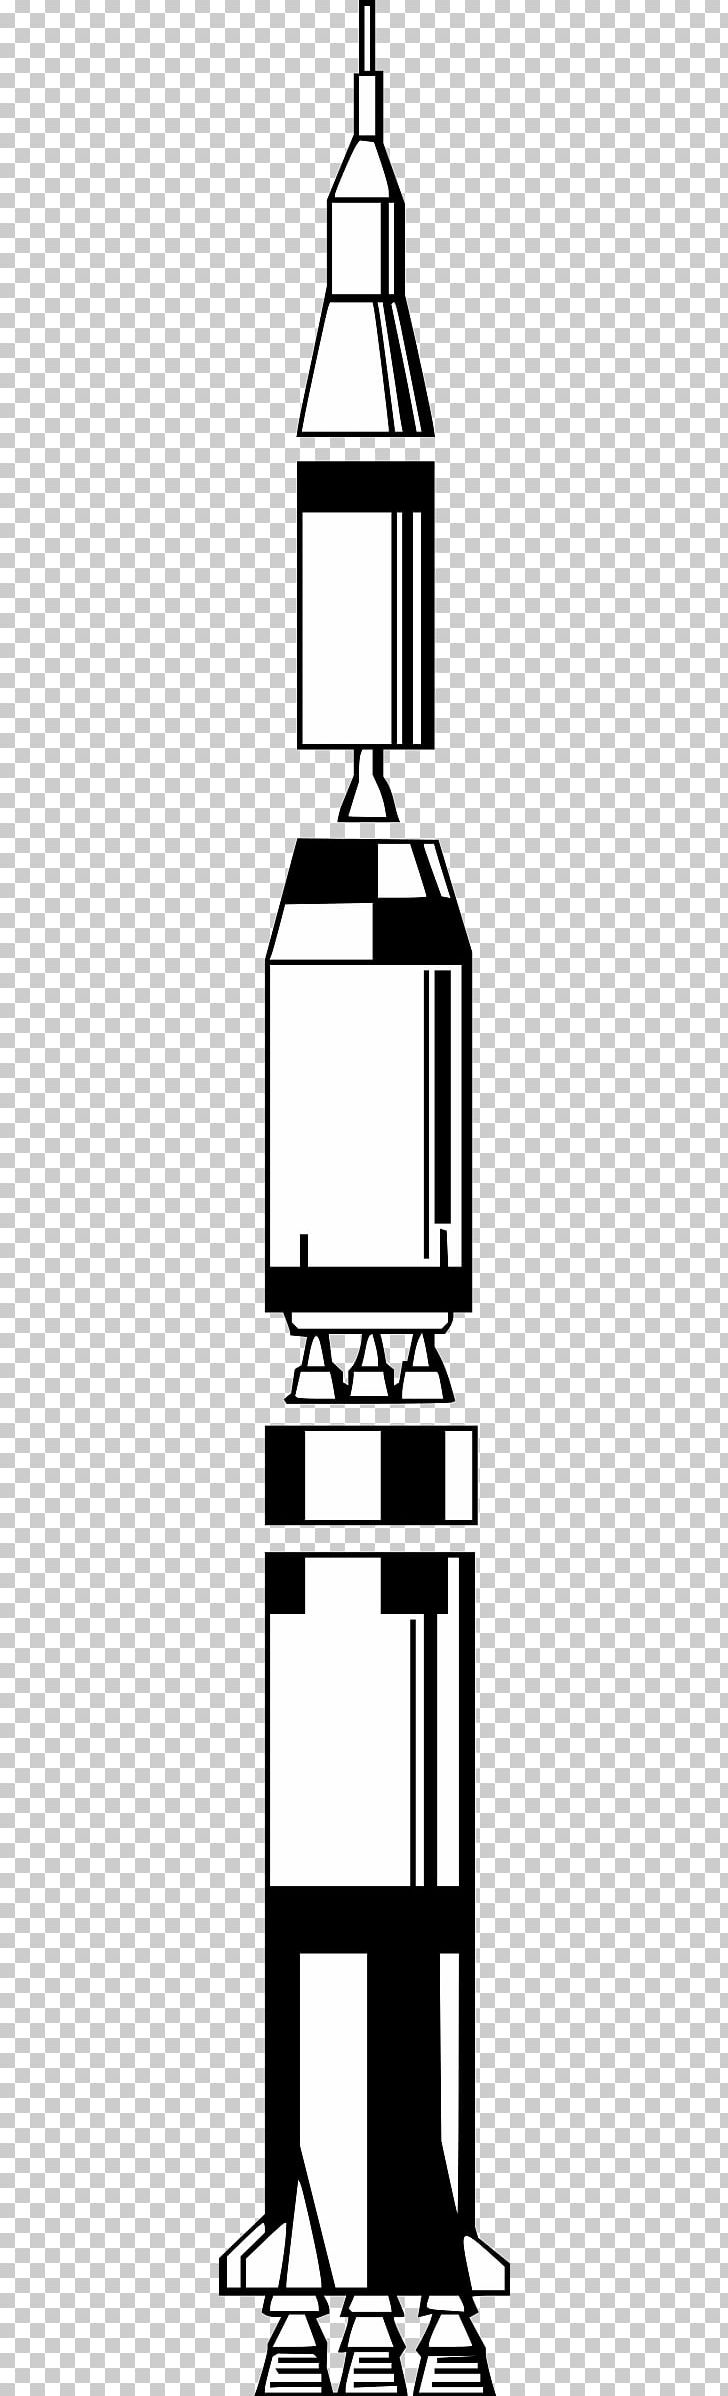 Apollo 13 Apollo Program Saturn V Rocket PNG, Clipart, Apollo, Apollo 13, Apollo Program, Black, Black And White Free PNG Download